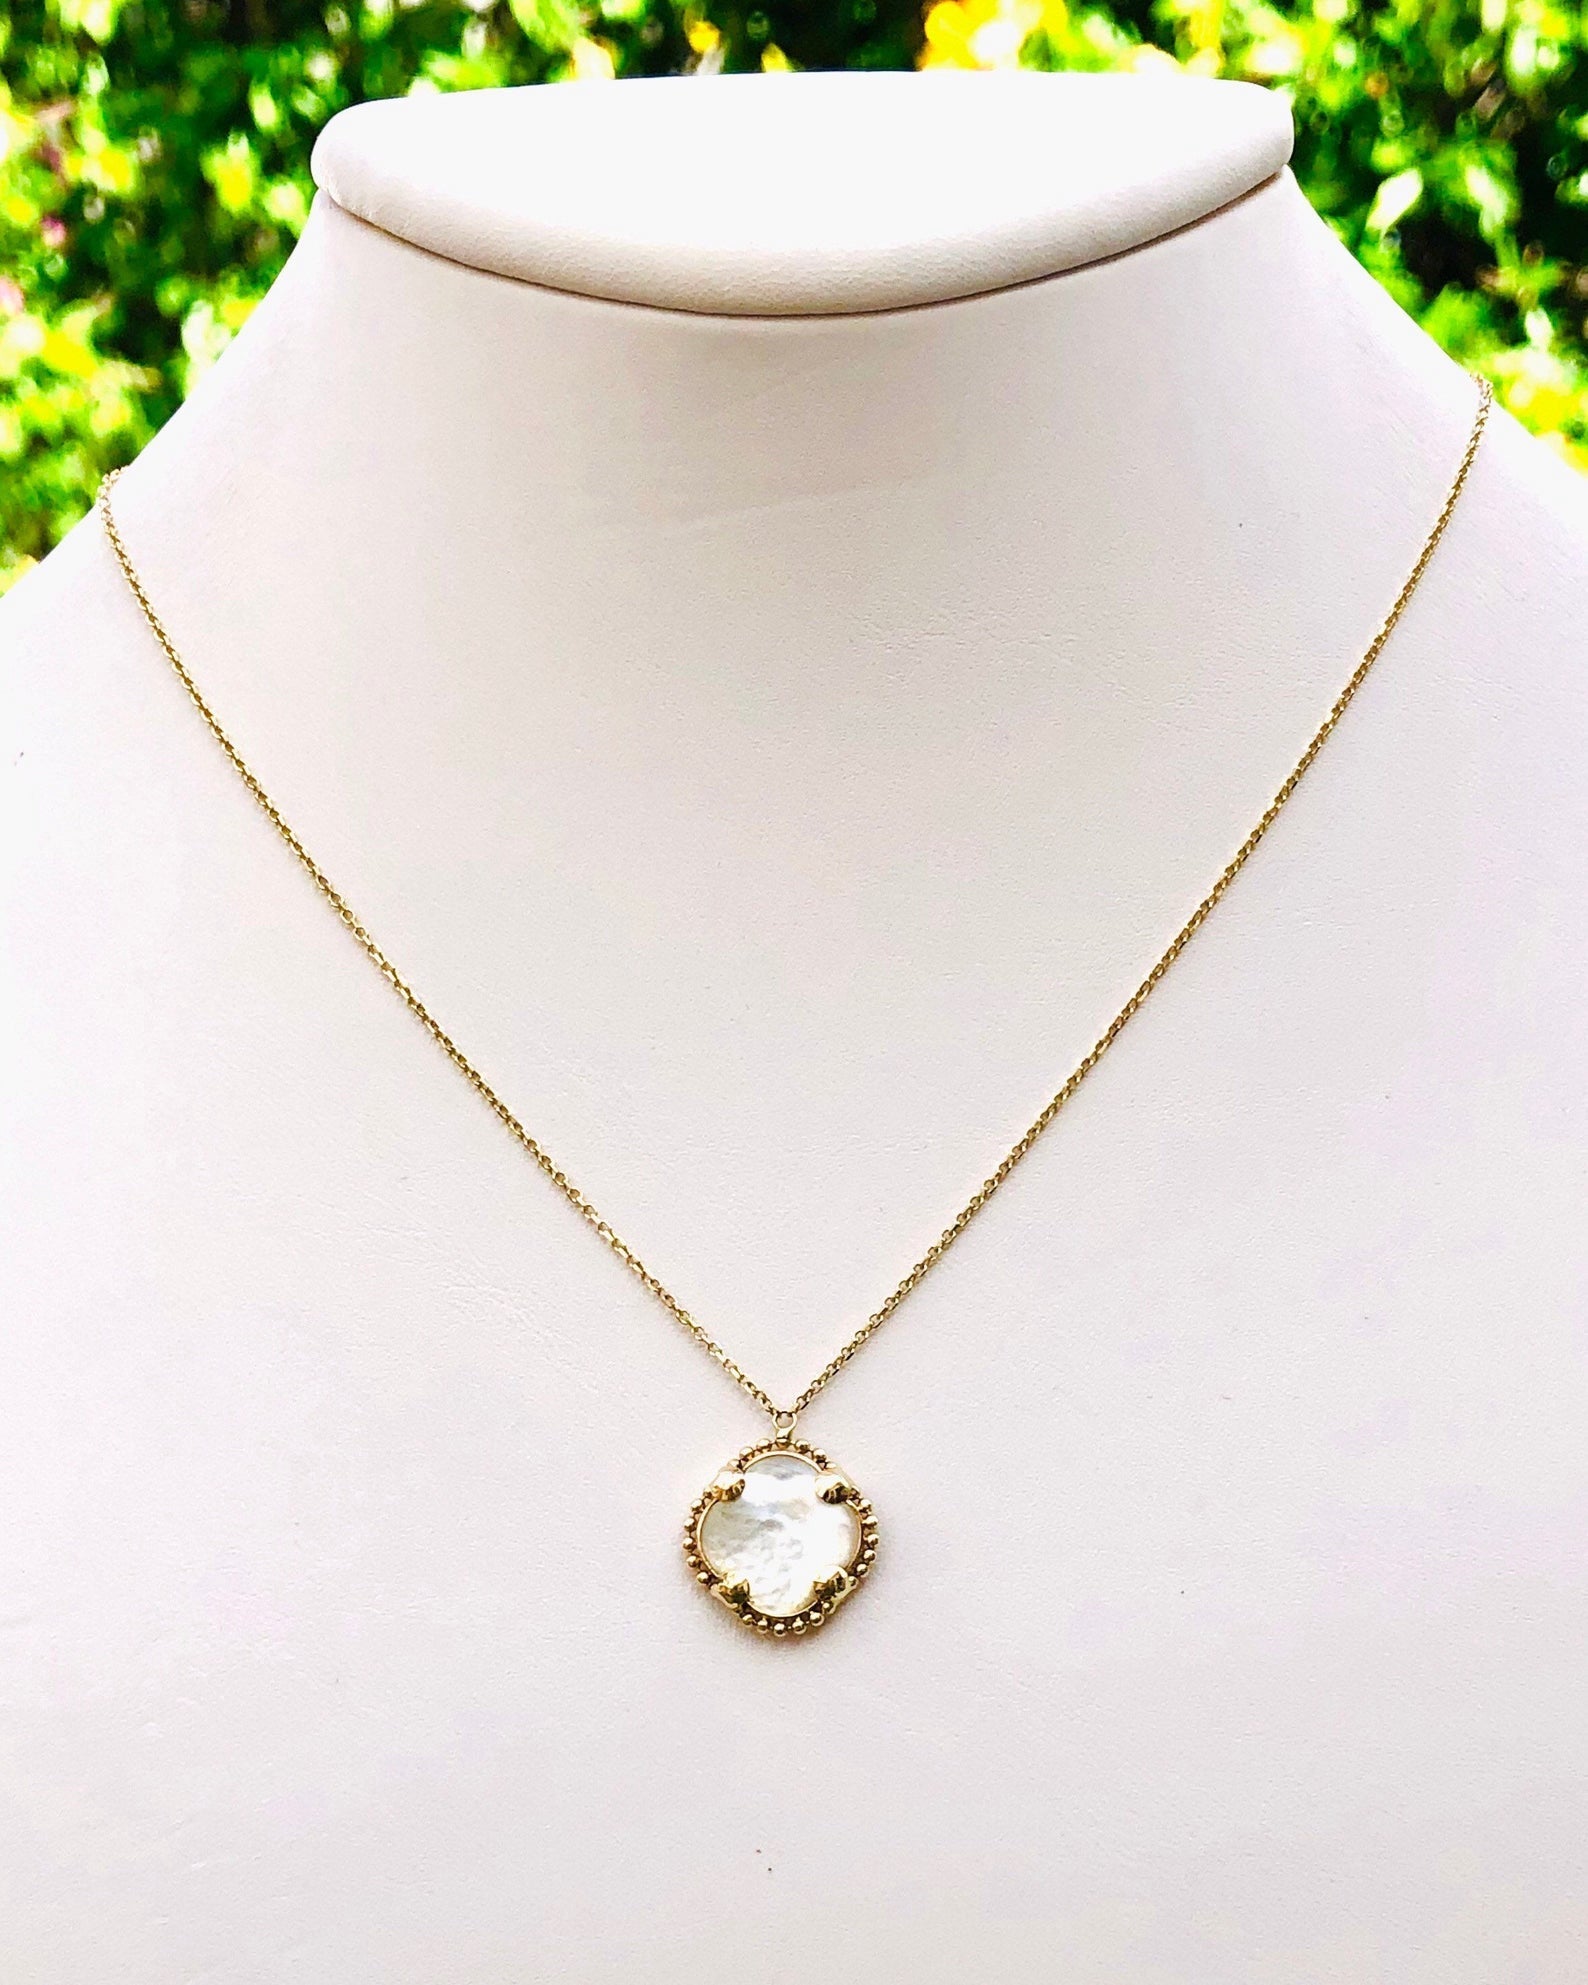 Daniel Creations Jewelry 14K Italian Gold Flower Necklace